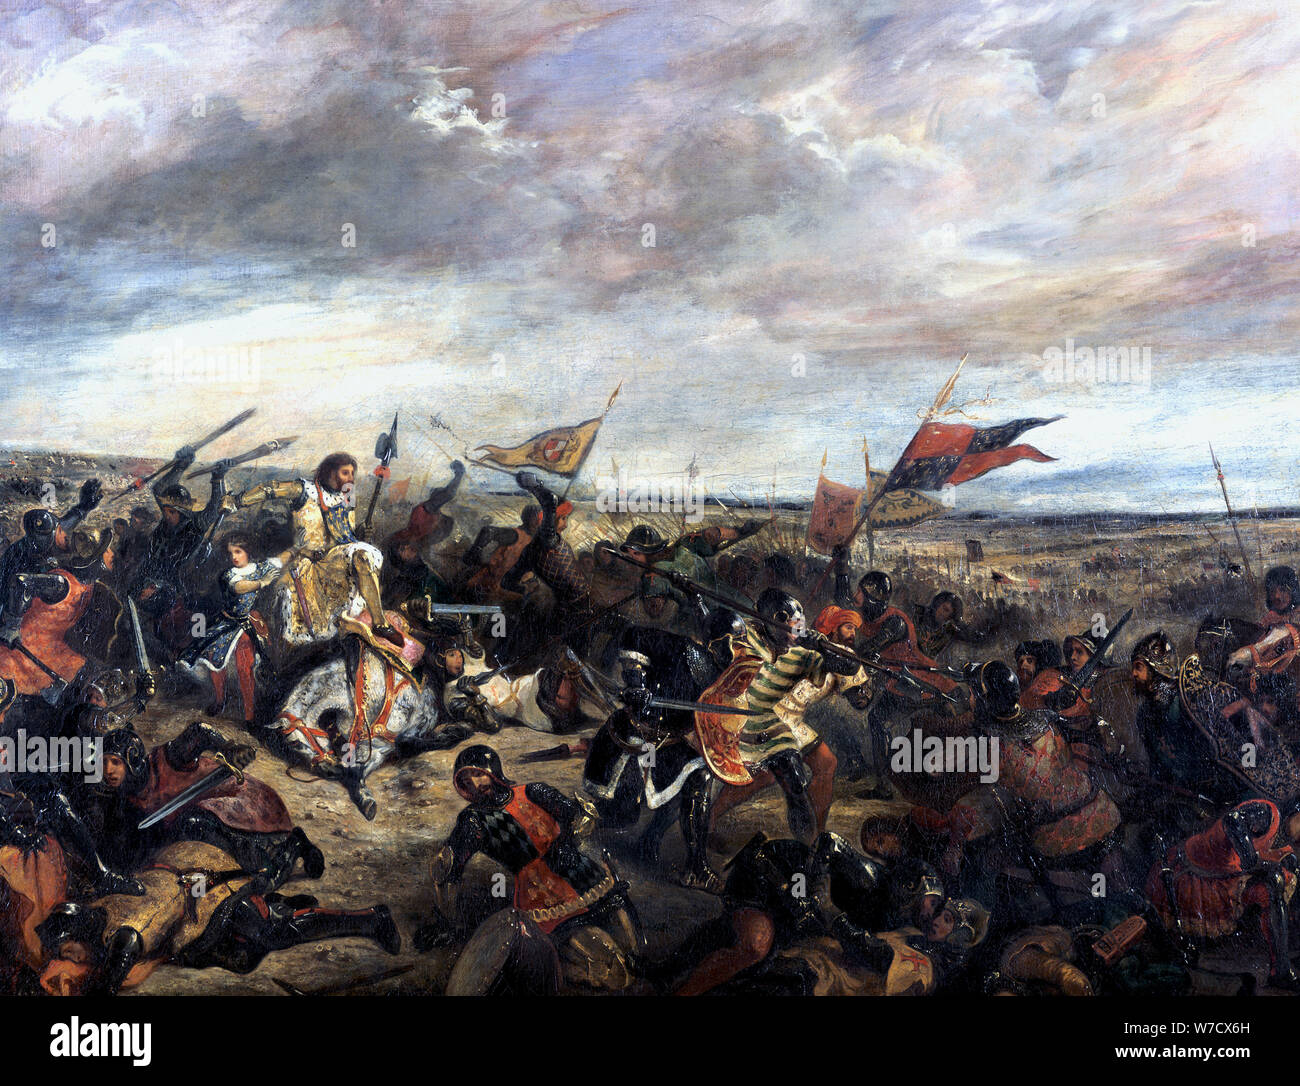 'Battle of Poitiers' (1356), 1830. Artist: Eugène Delacroix Stock Photo